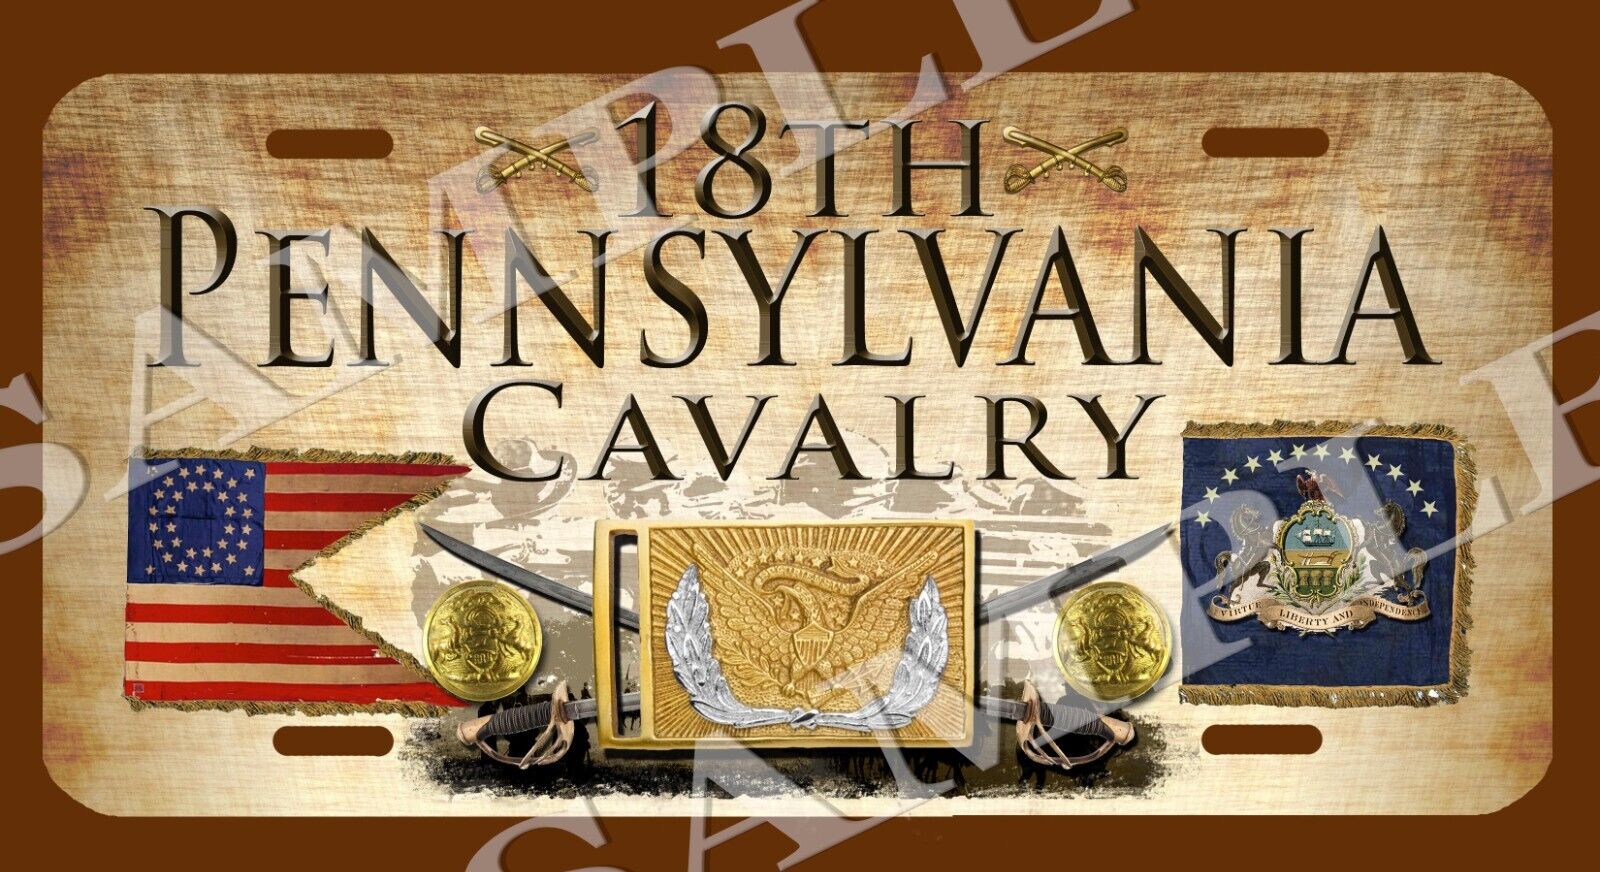 18th Pennsylvania Cavalry American Civil War Themed vehicle license plate